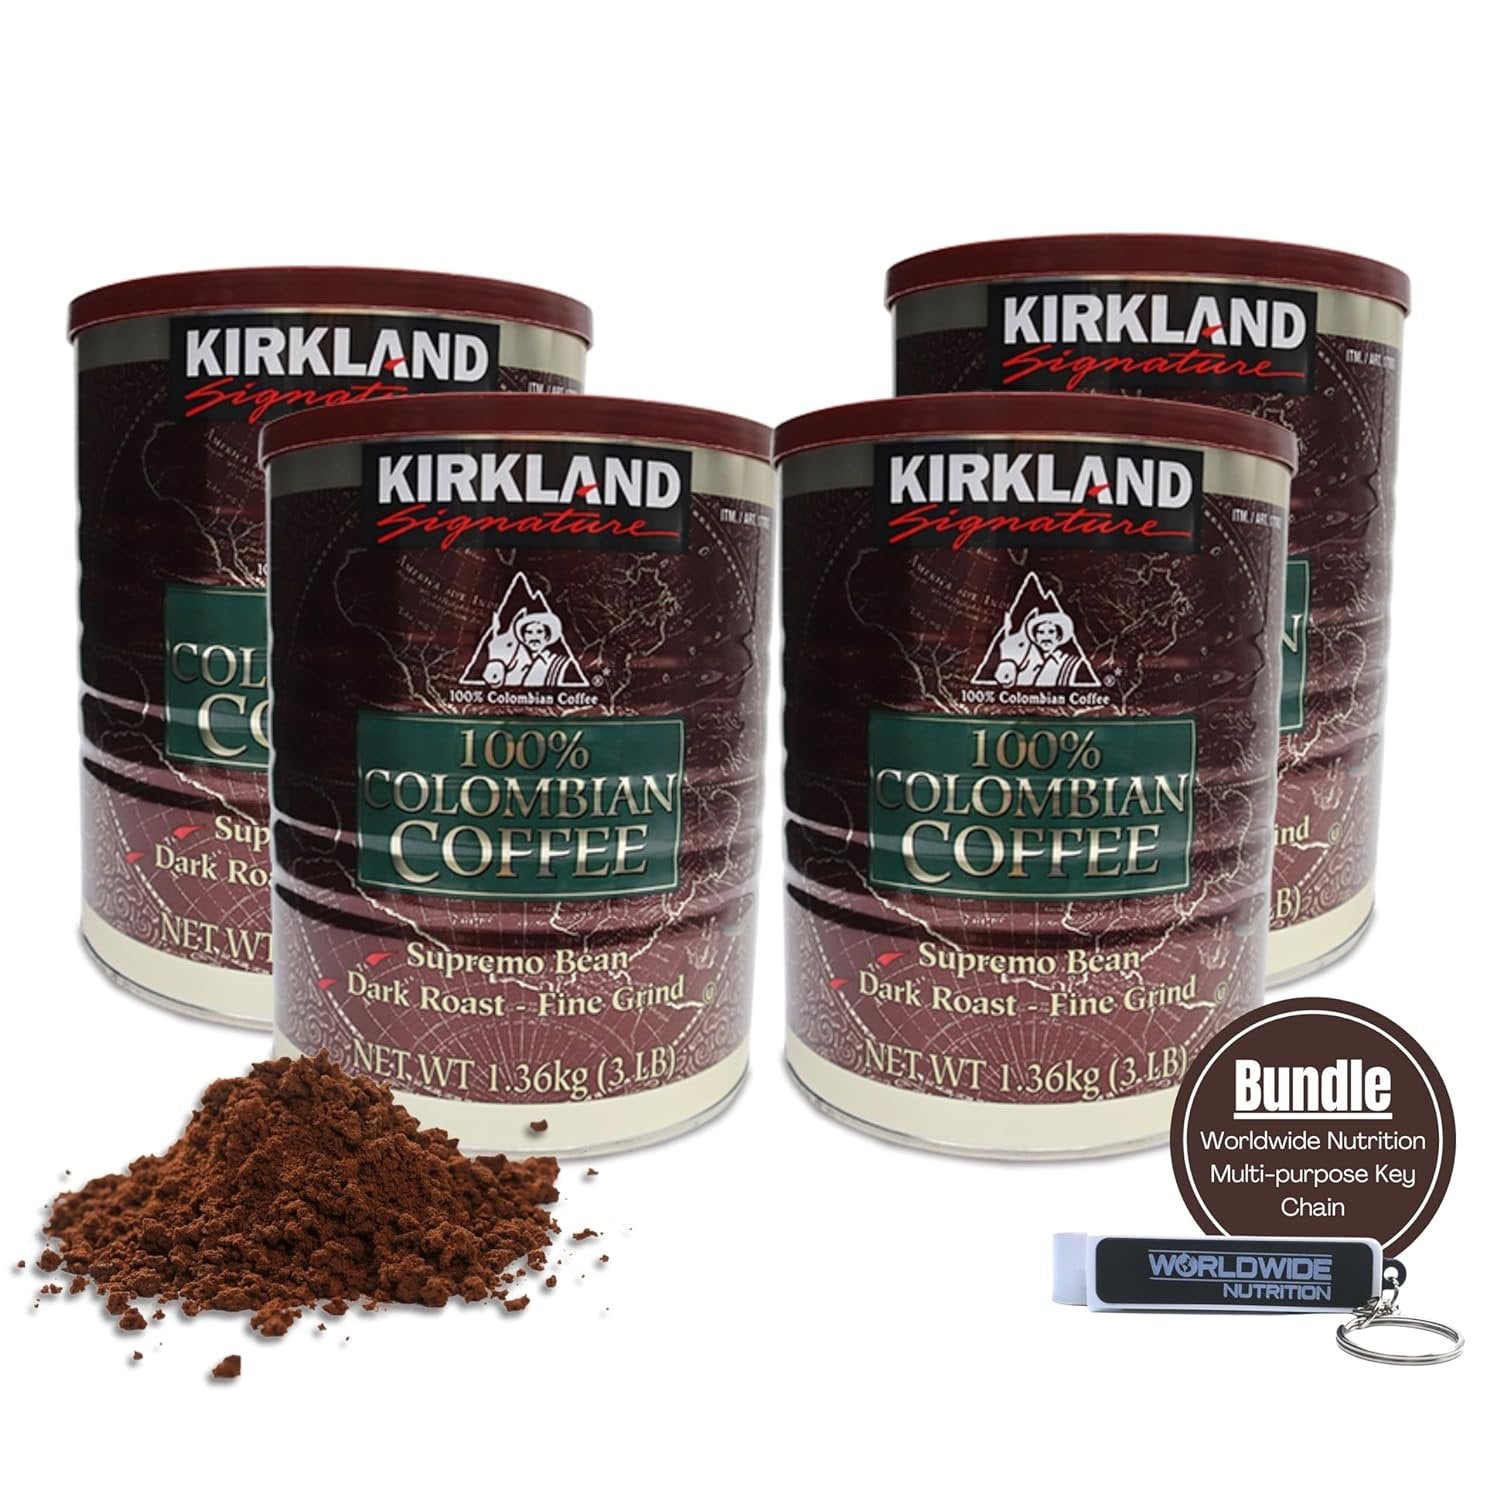 Kirkland Signature 100% Colombian Coffee Supremo Bean - Dark Roast - Fine Grind - 4 Pack of 3lb - with Multi-Purpose Key Chain